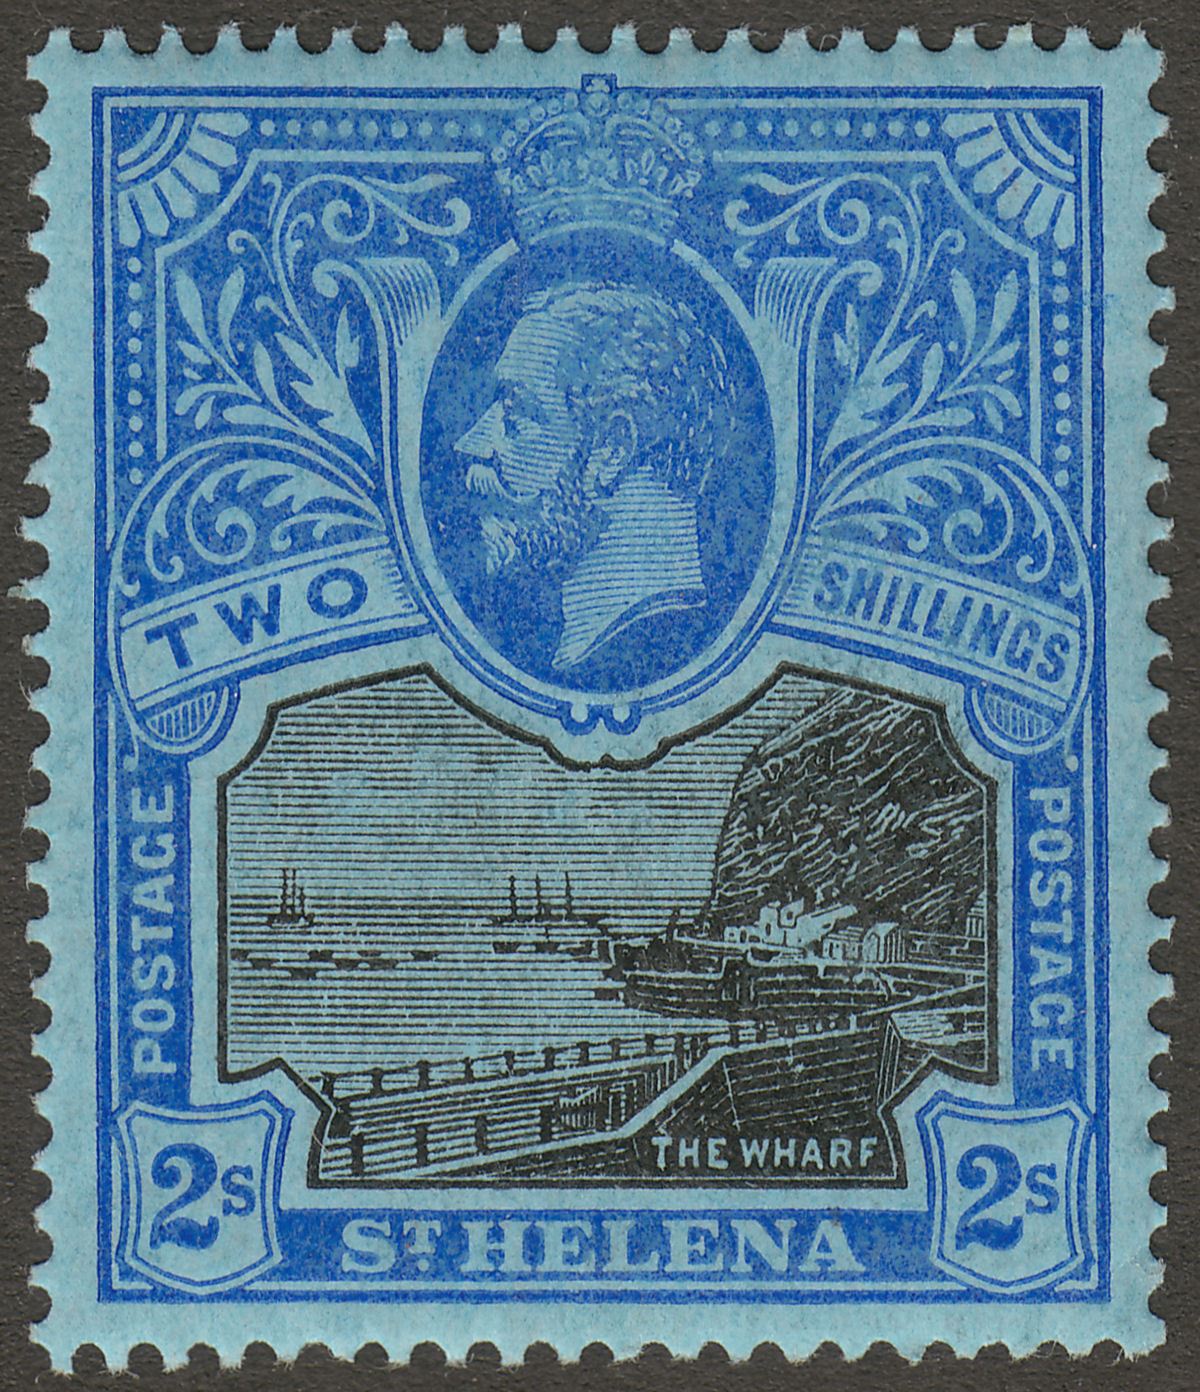 St Helena 1912 KGV 2sh Black and Blue Mint SG80